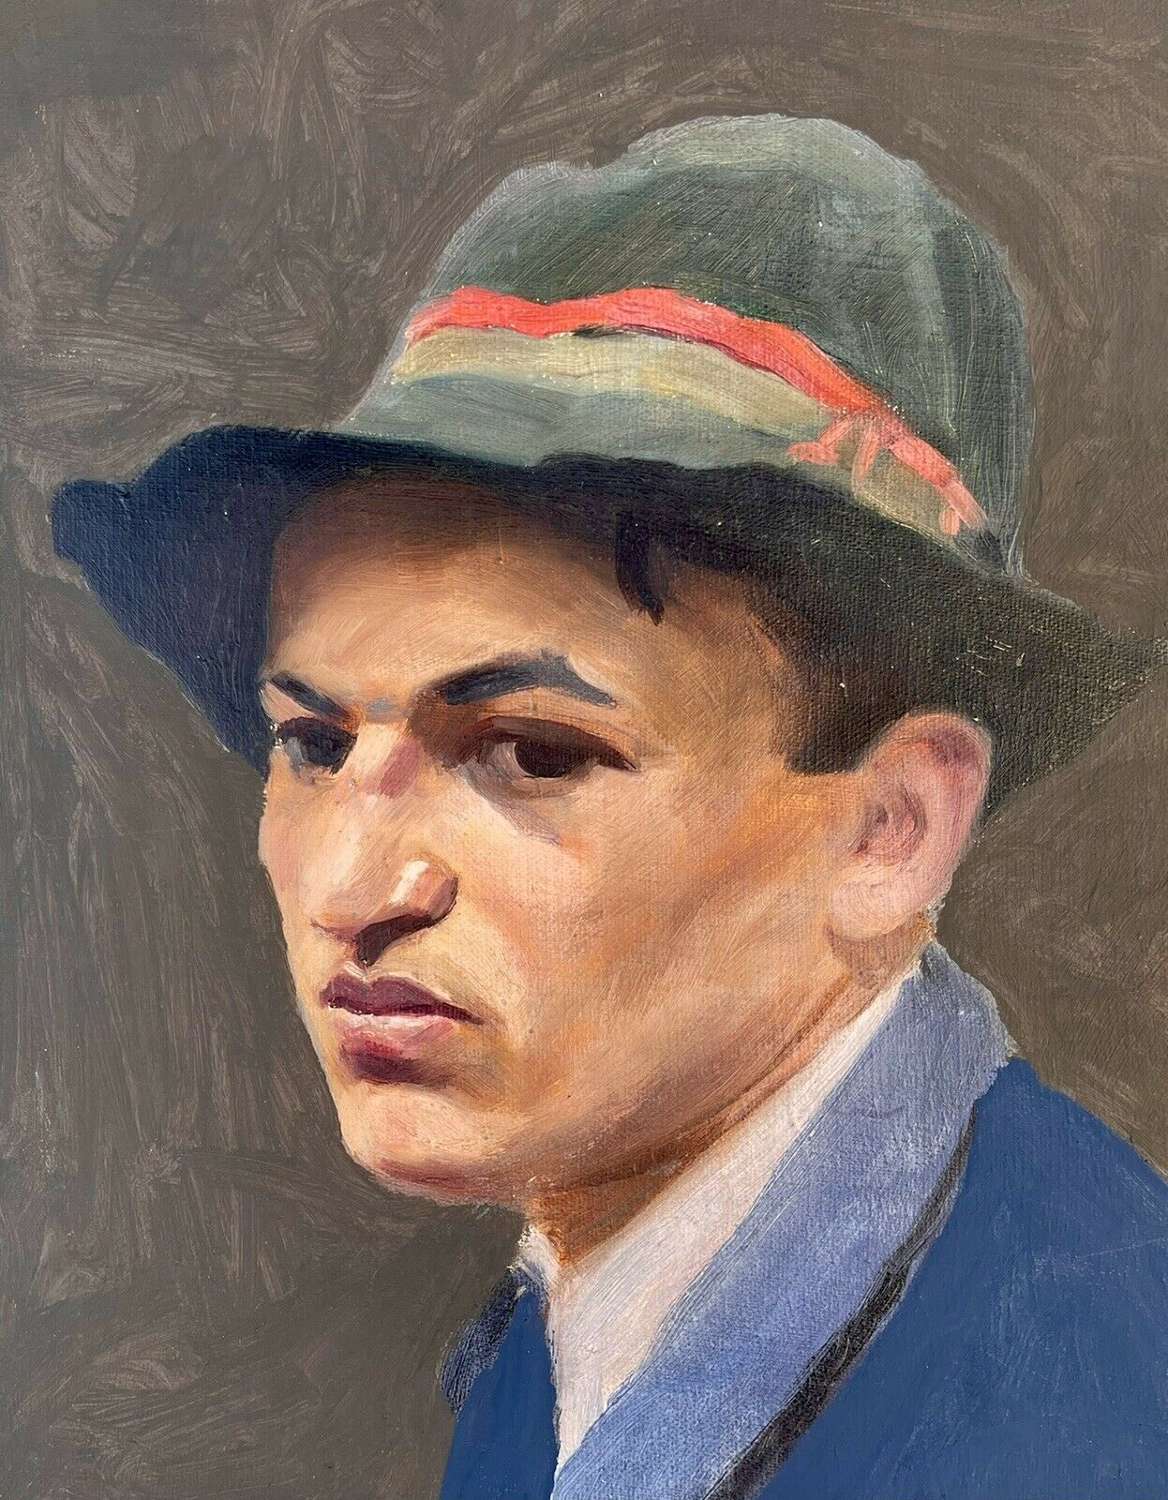 Vintage Portrait of an Italian man